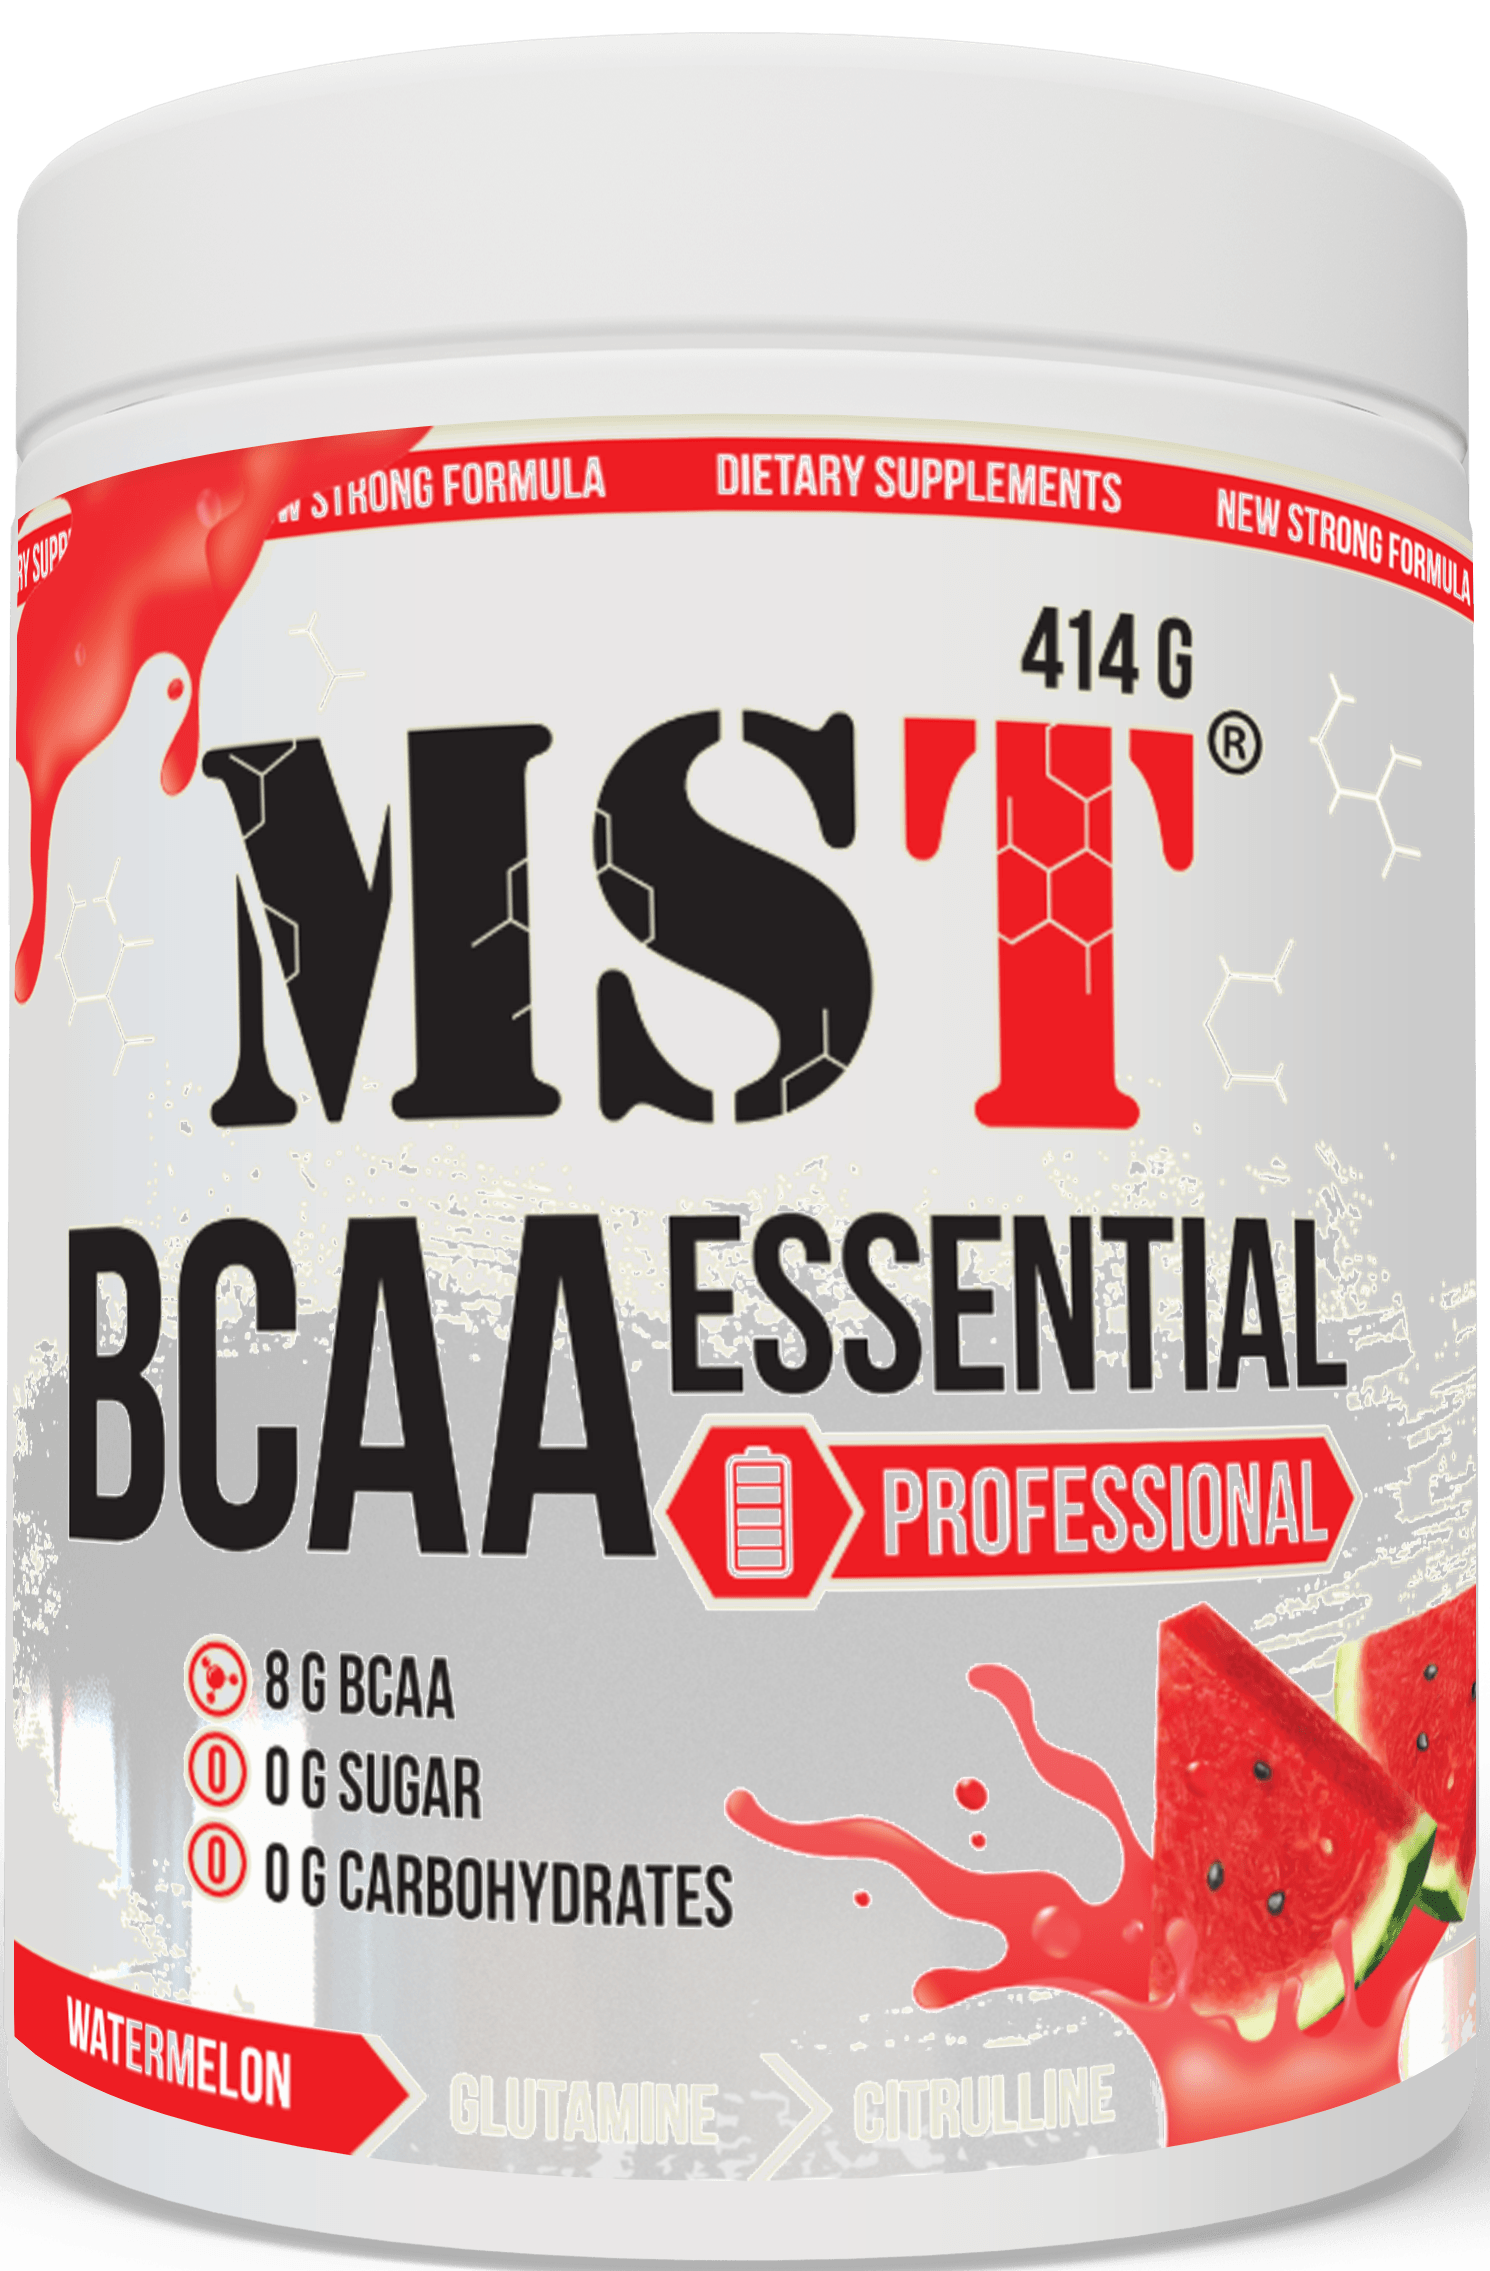 BCAA Essential Professional, 414 г, MST Nutrition. Аминокислотные комплексы. 